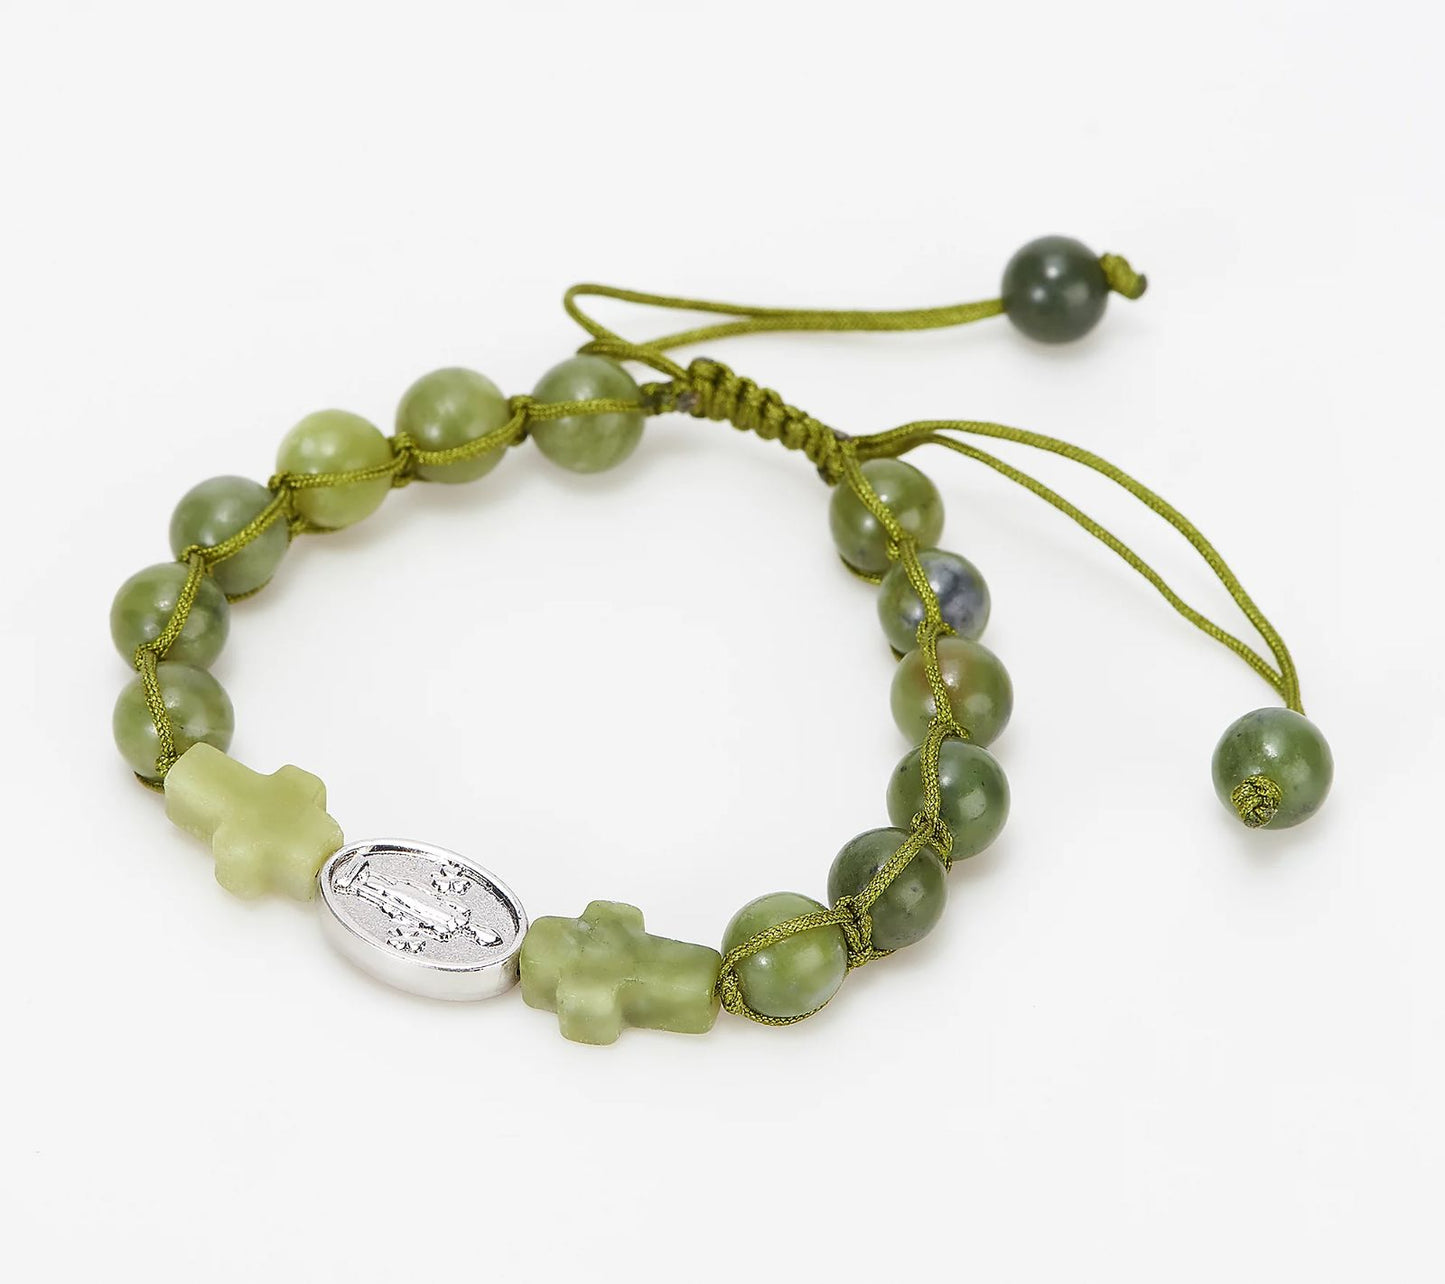 Connemara Marble Adjustable Bracelet with Cross Beads. St. Patrick